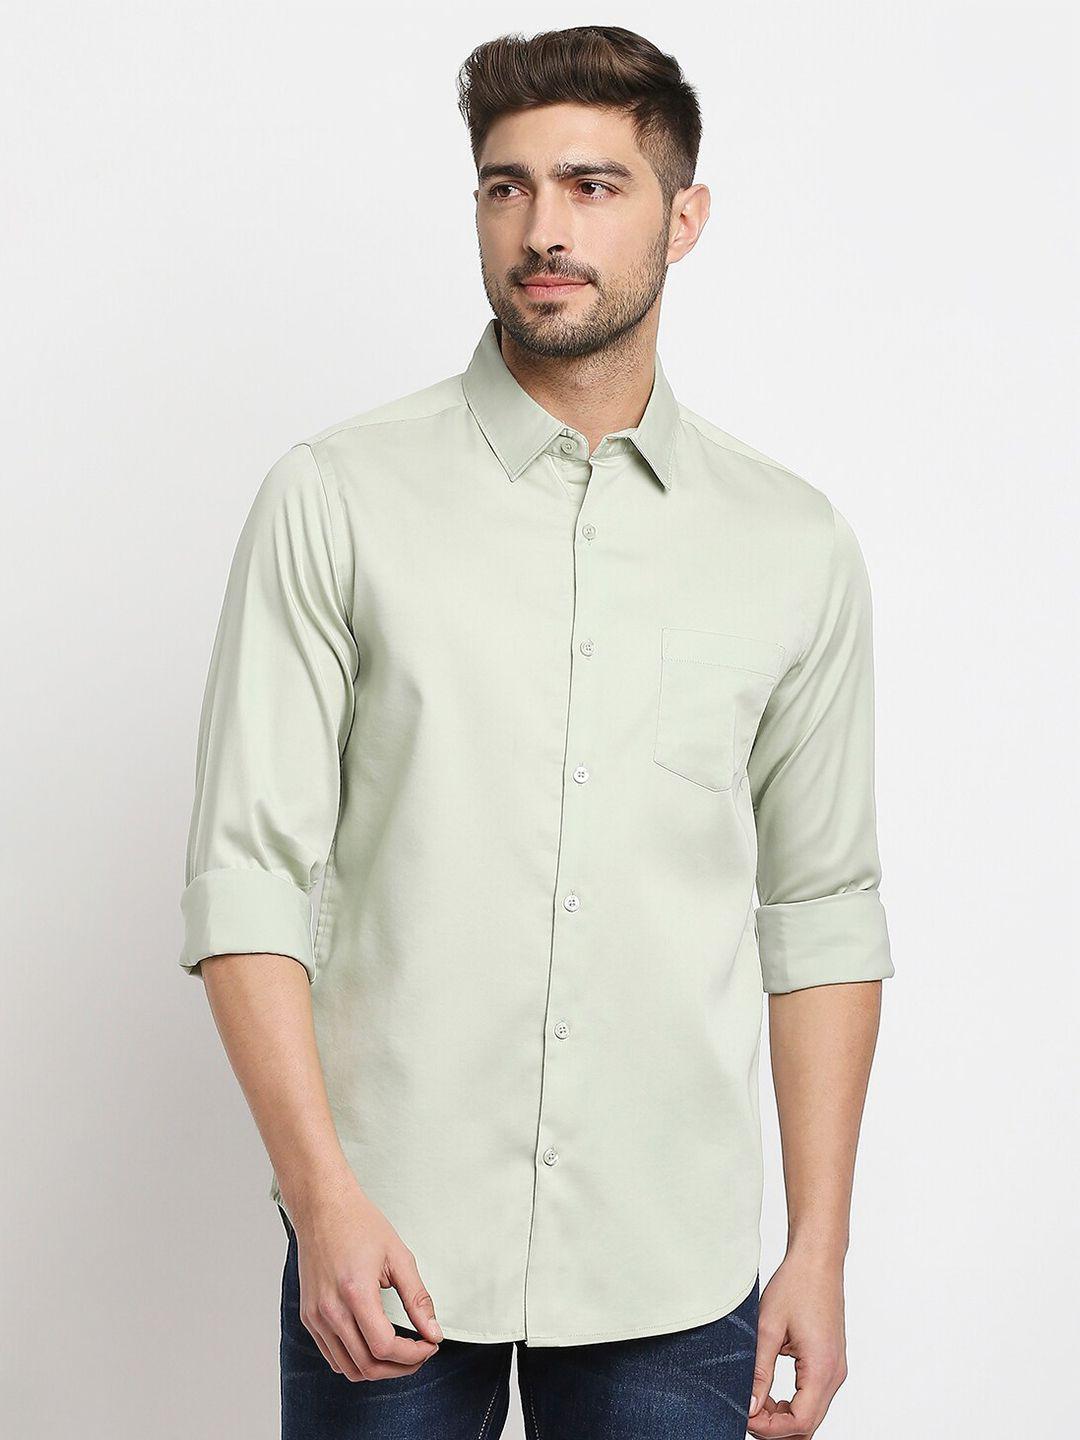 valen-club-men-lime-green-slim-fit-formal-shirt